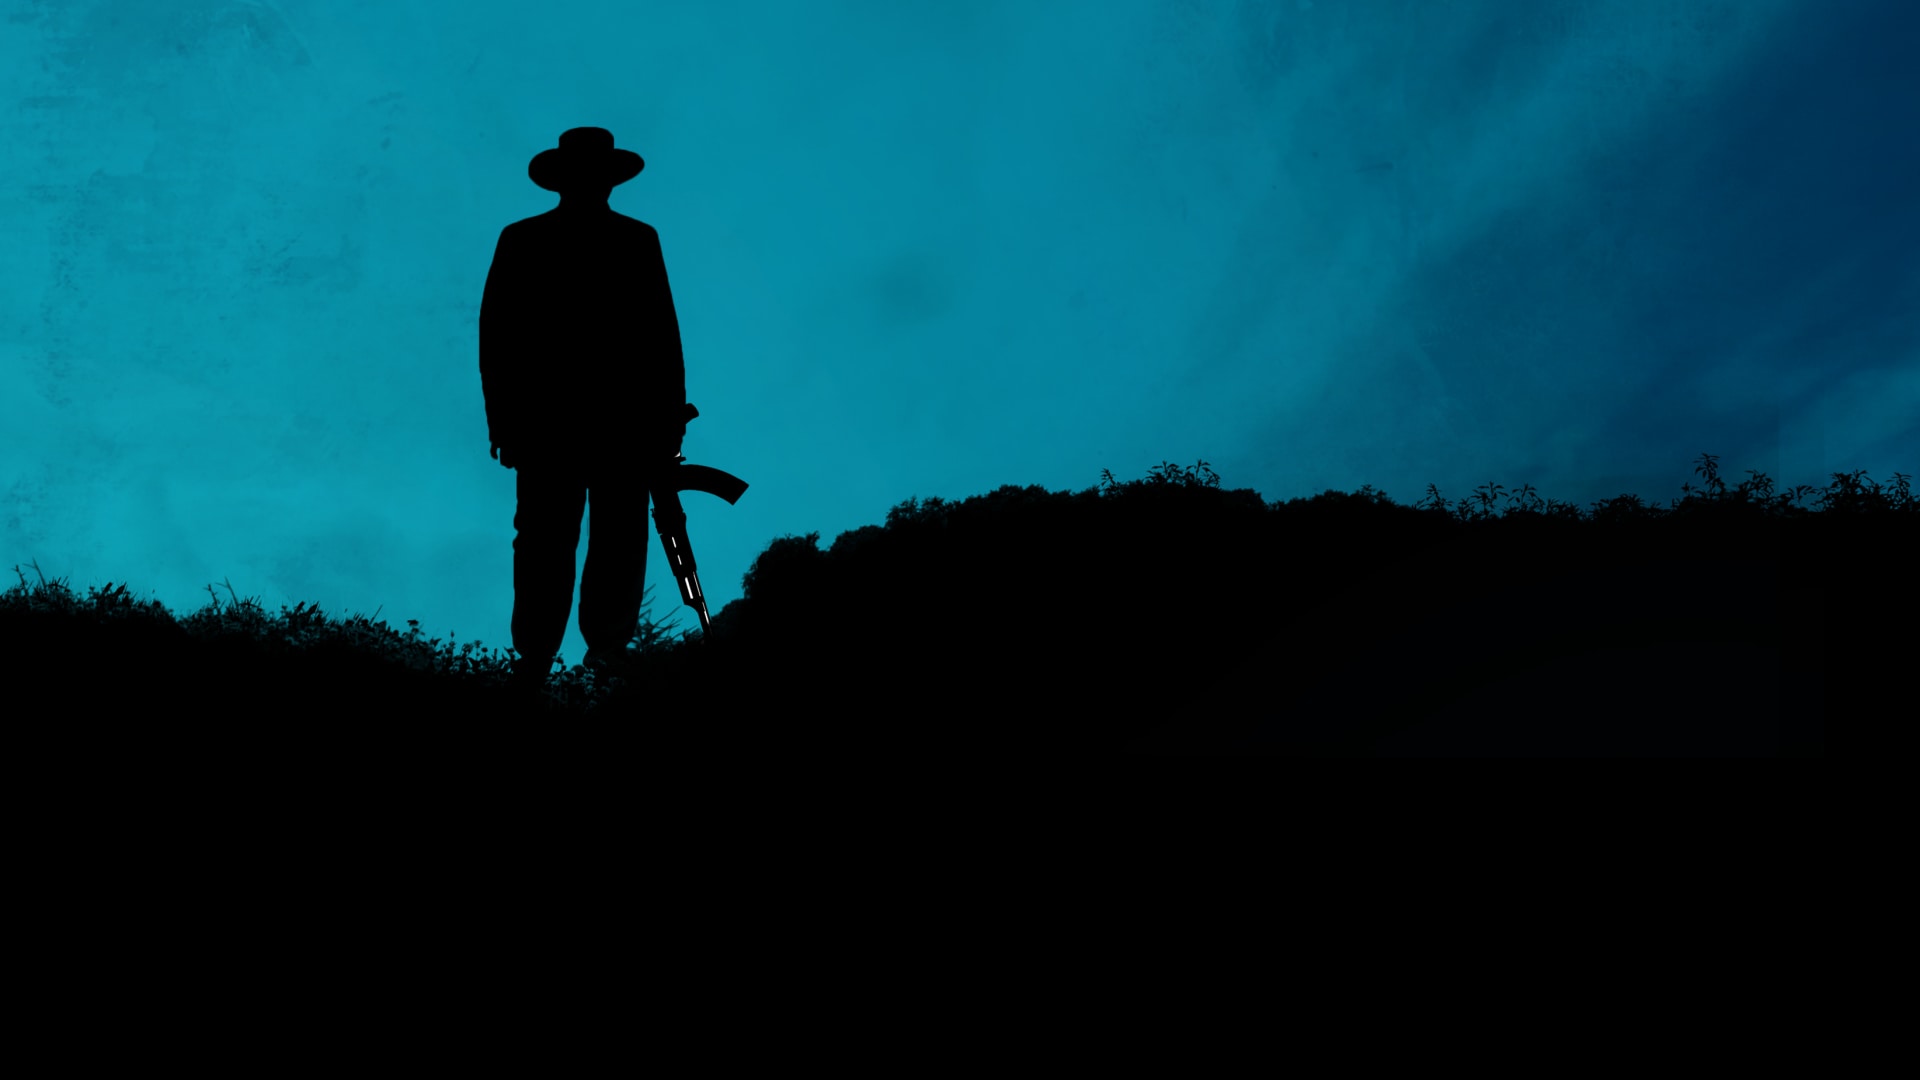 Amish Mafia season 3 He Has Risen - Metacritic